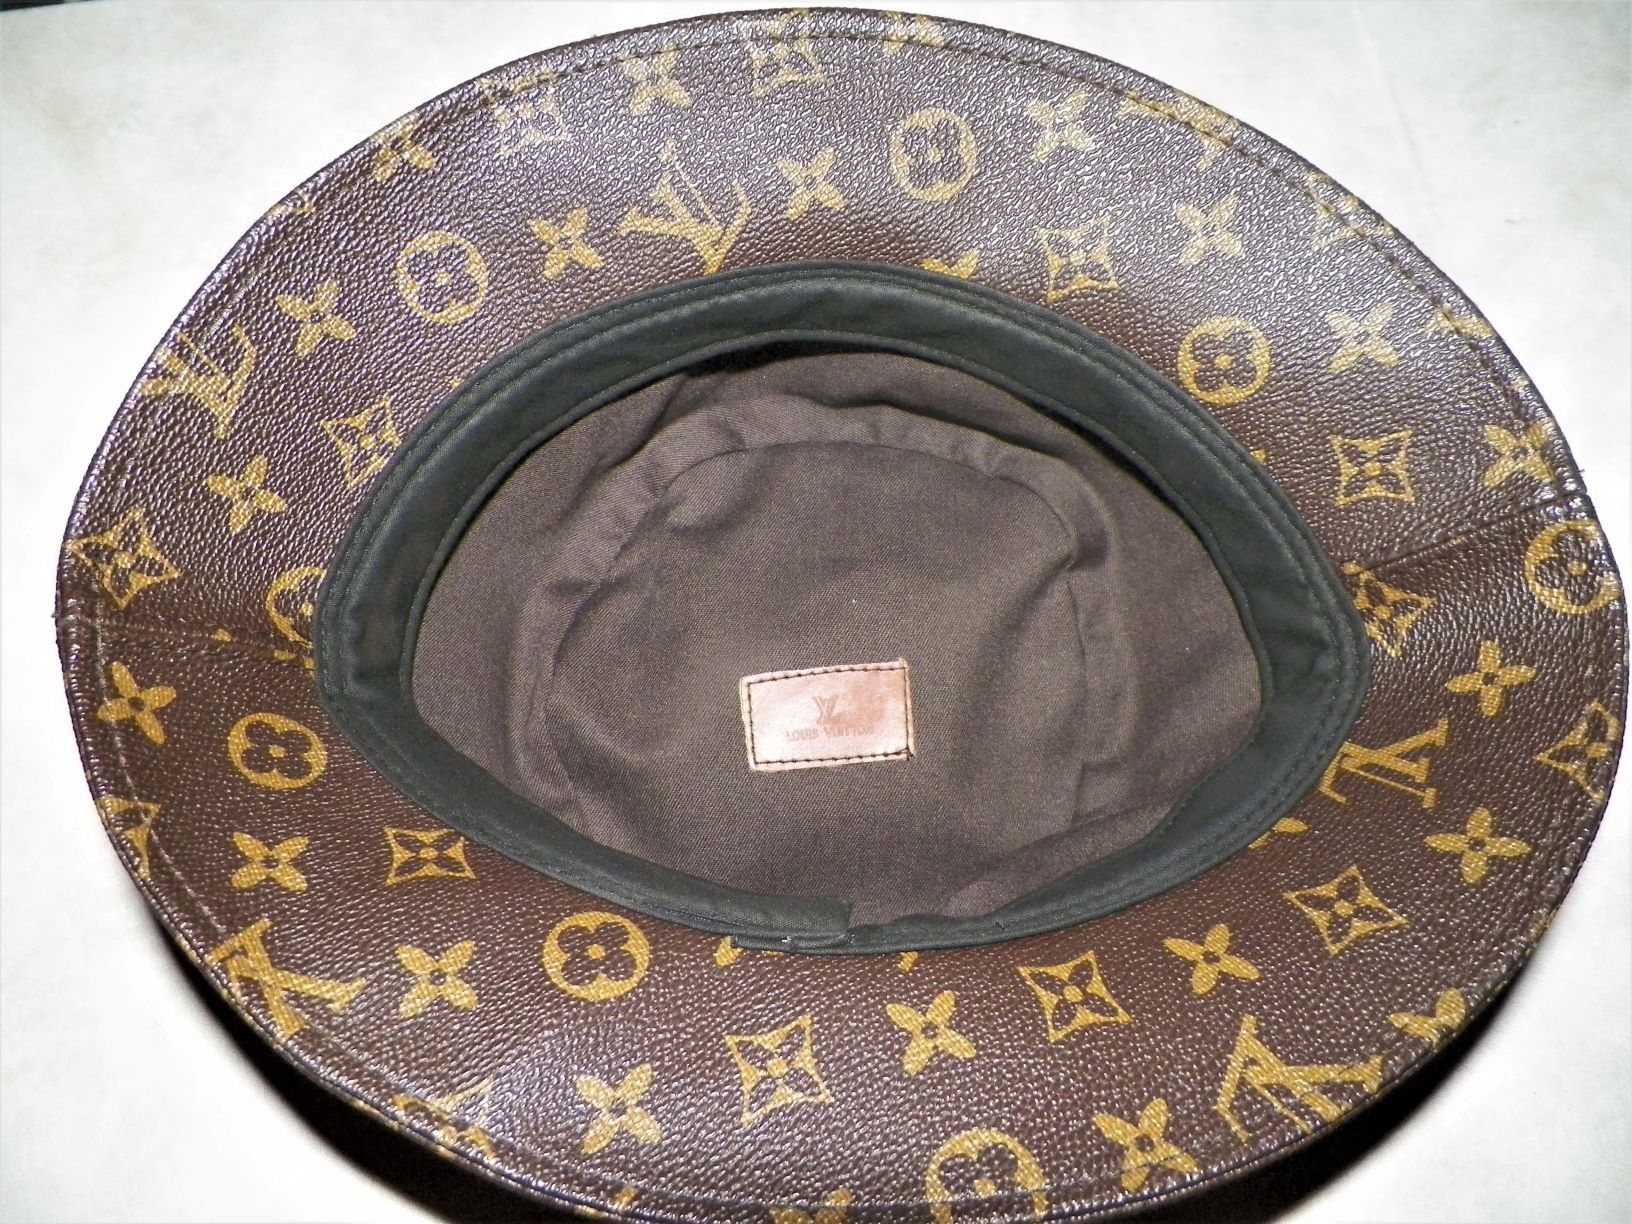 Vintage (Bootleg / fake?) LV Multicolored Bucket Hat : r/HelpMeFind